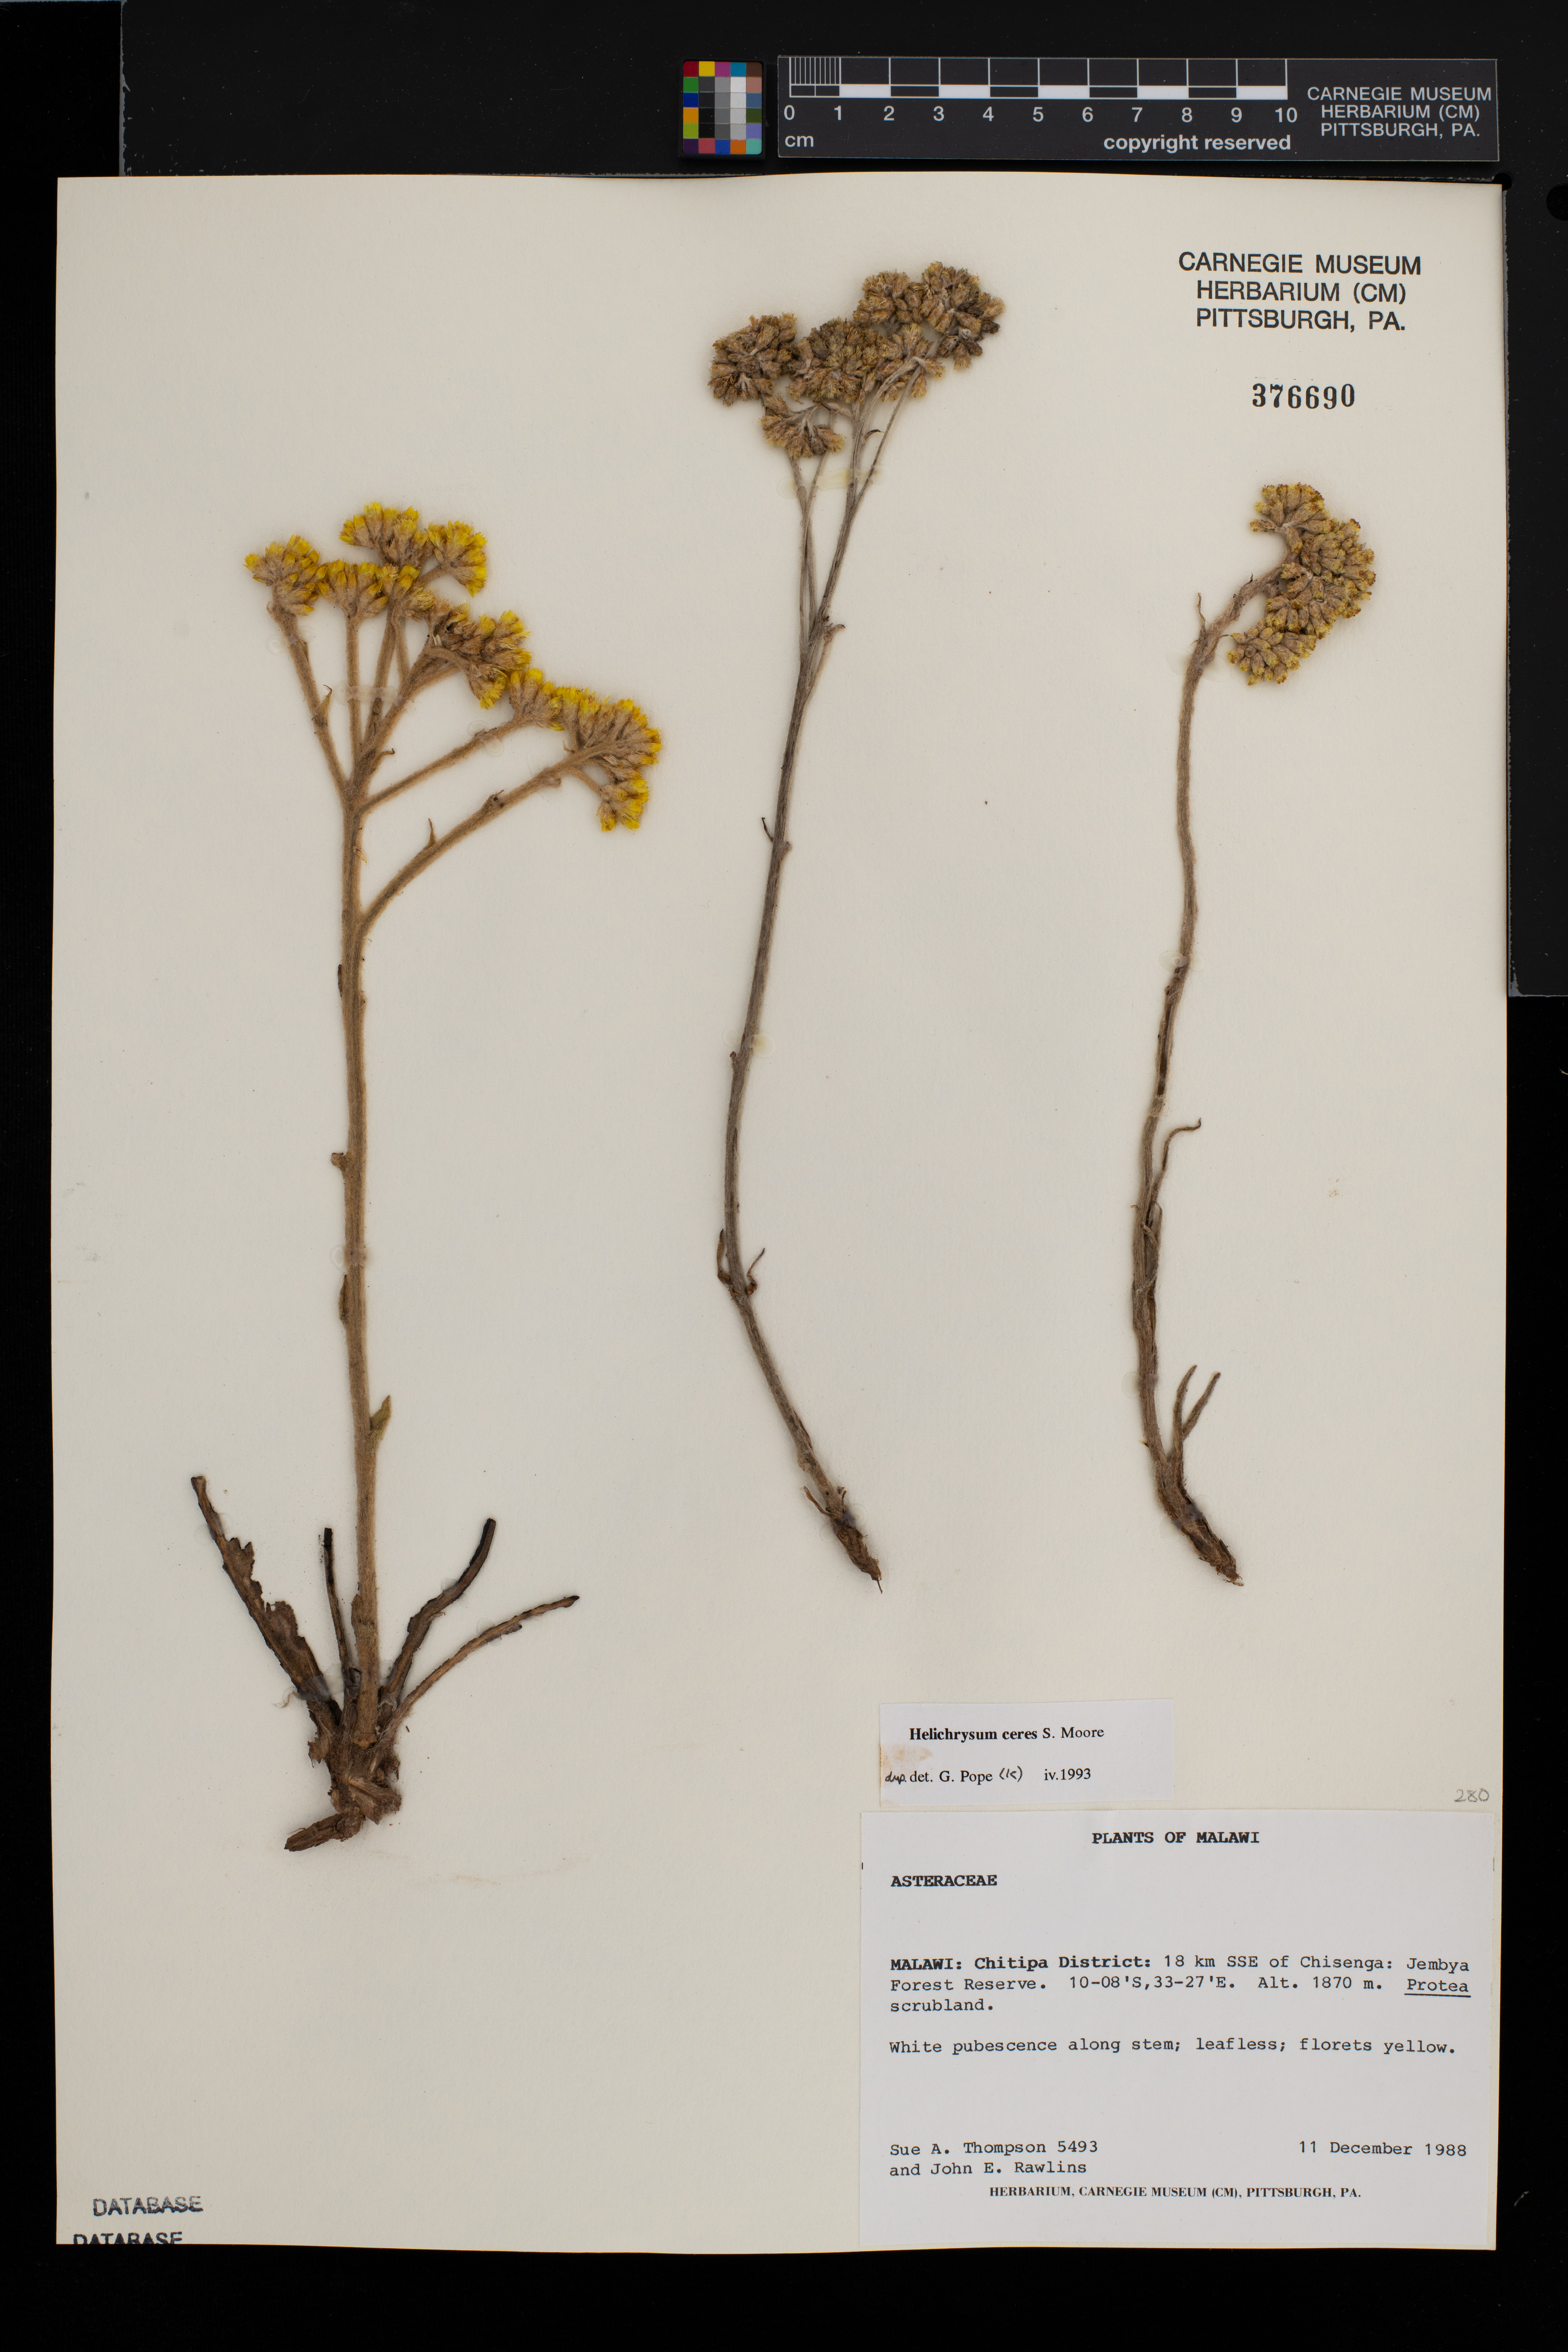 Helichrysum mechowianum image